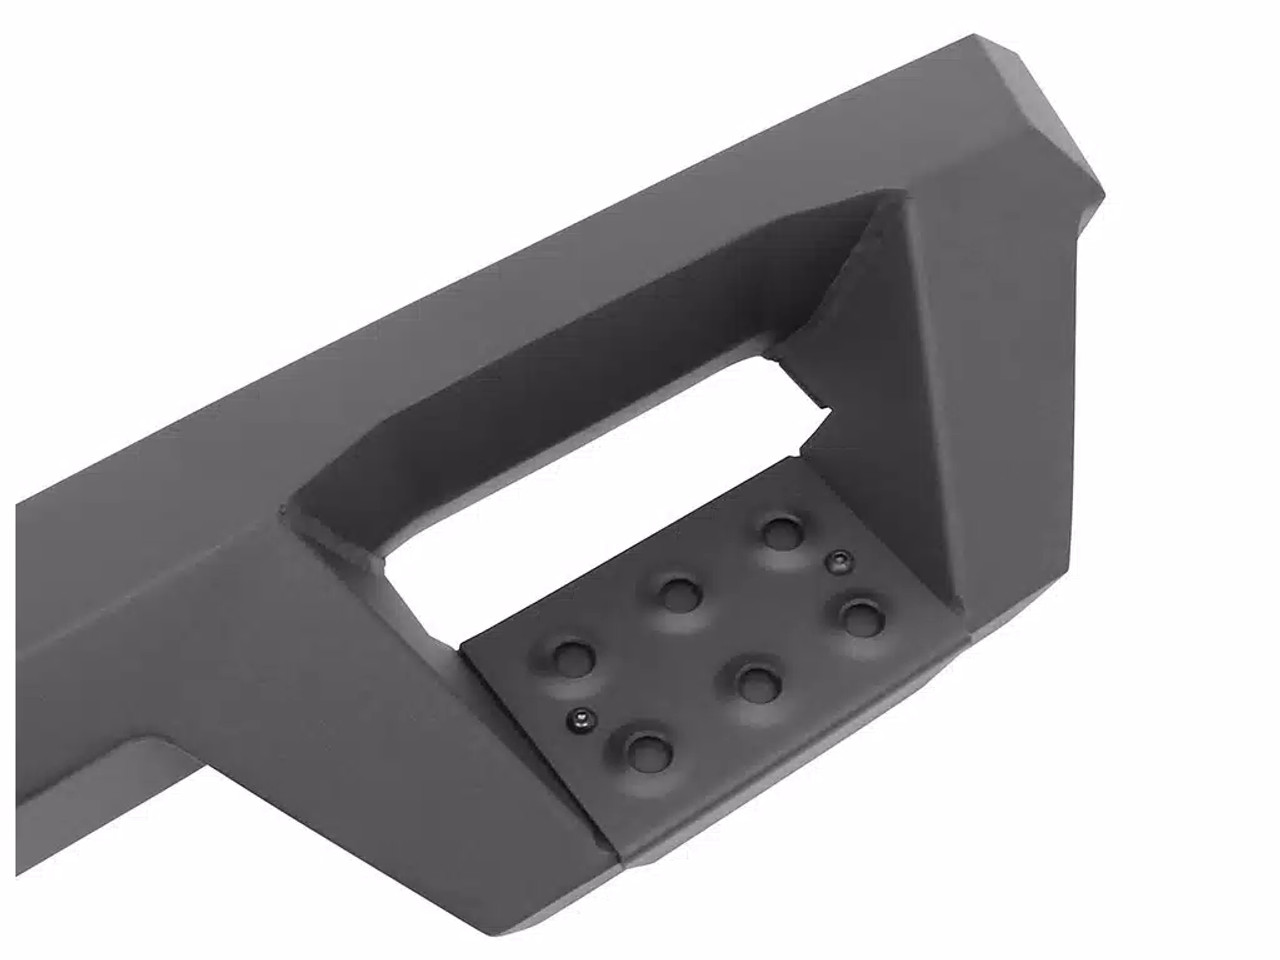 Westin HDX Drop Wheel-to-Wheel Nerf Step Bars w/ Mounting Kit, Stainless